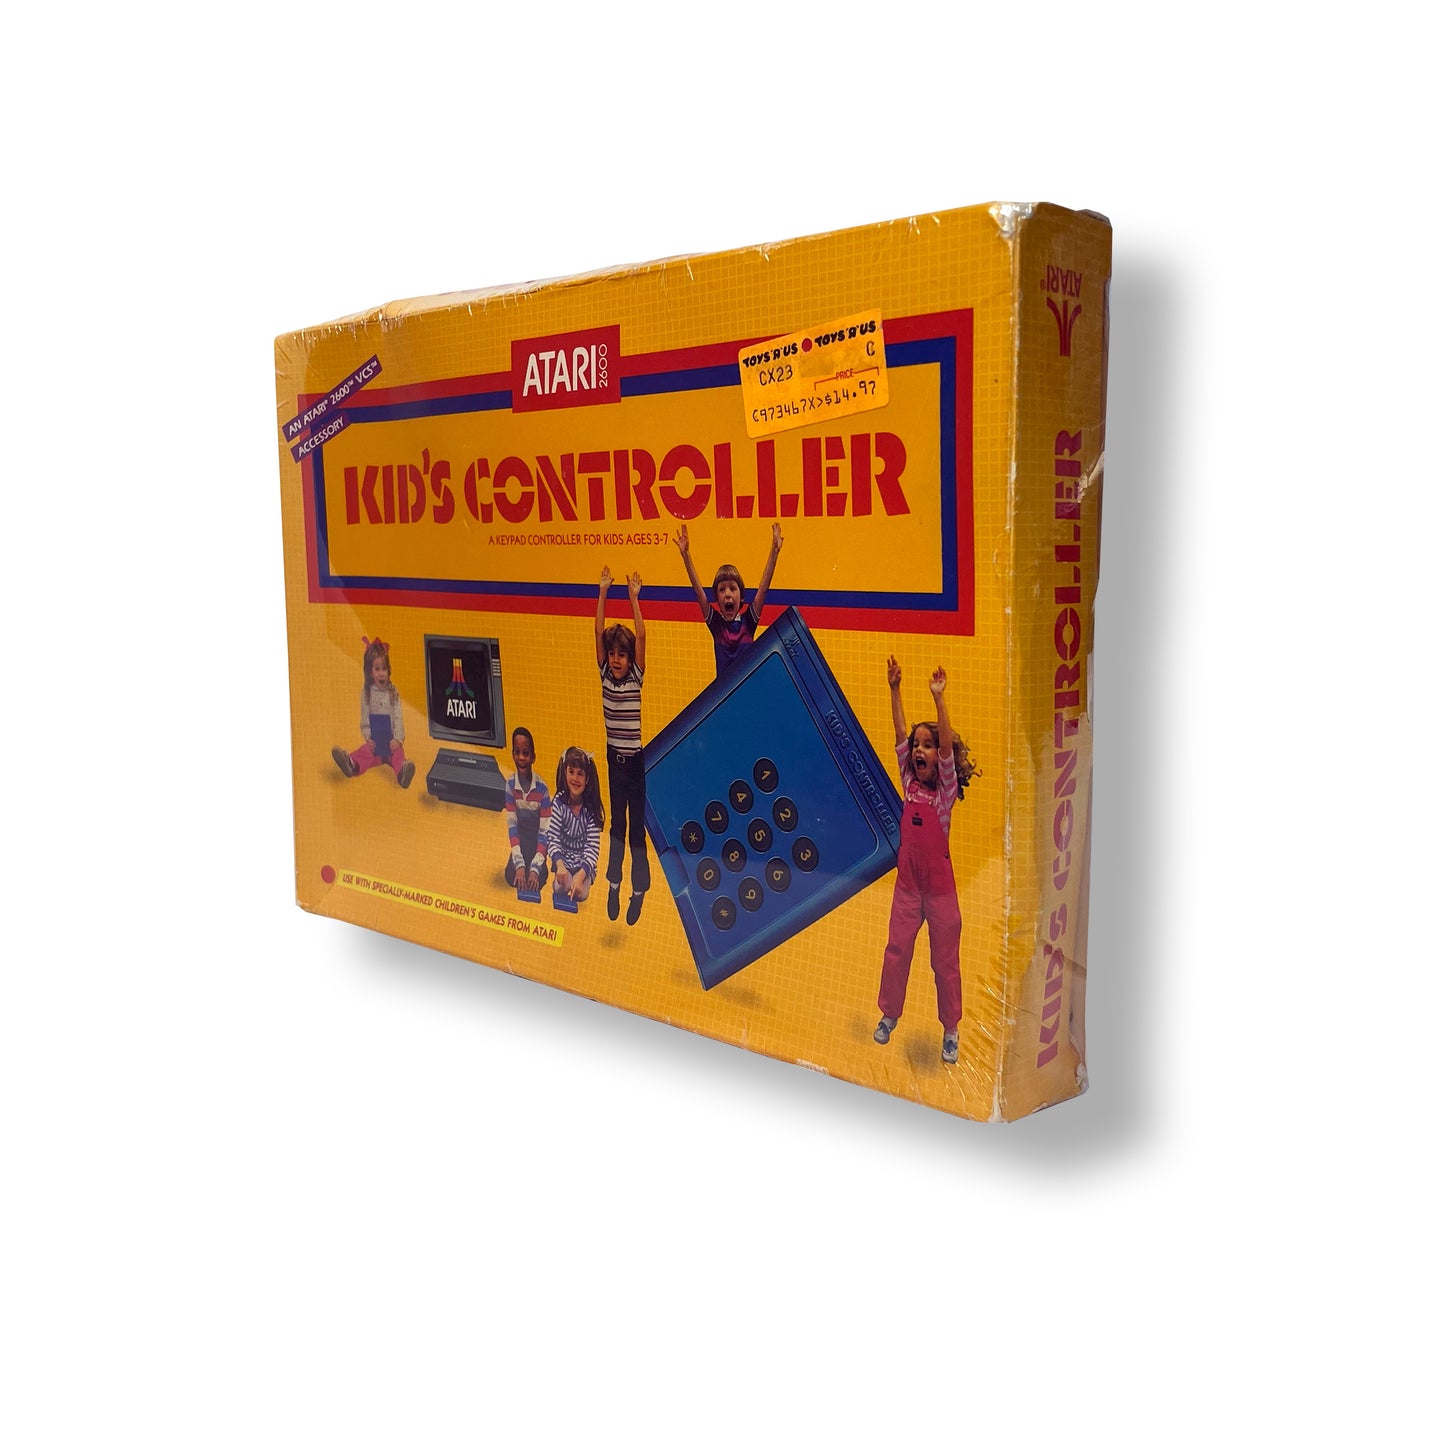 Atari Kid's Controller